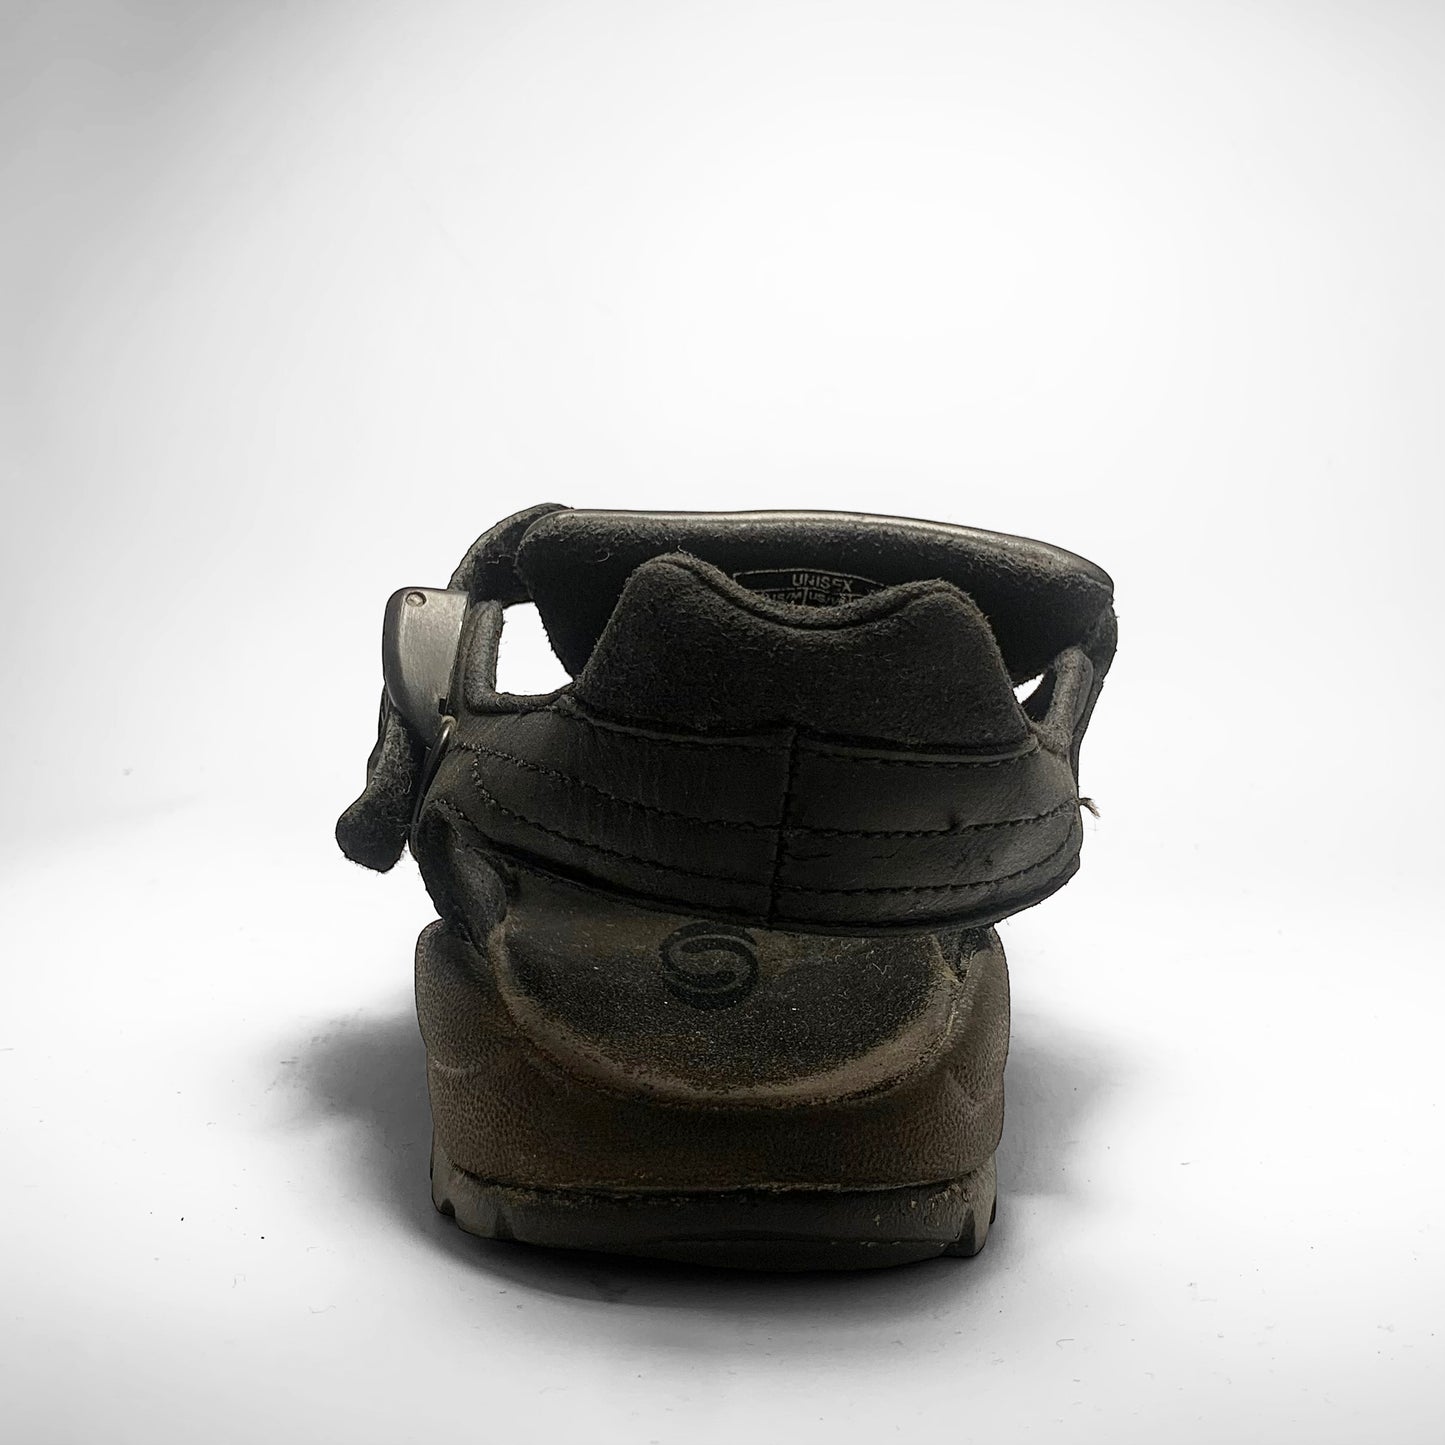 Salomon Habana Leather Sandals (2000s)